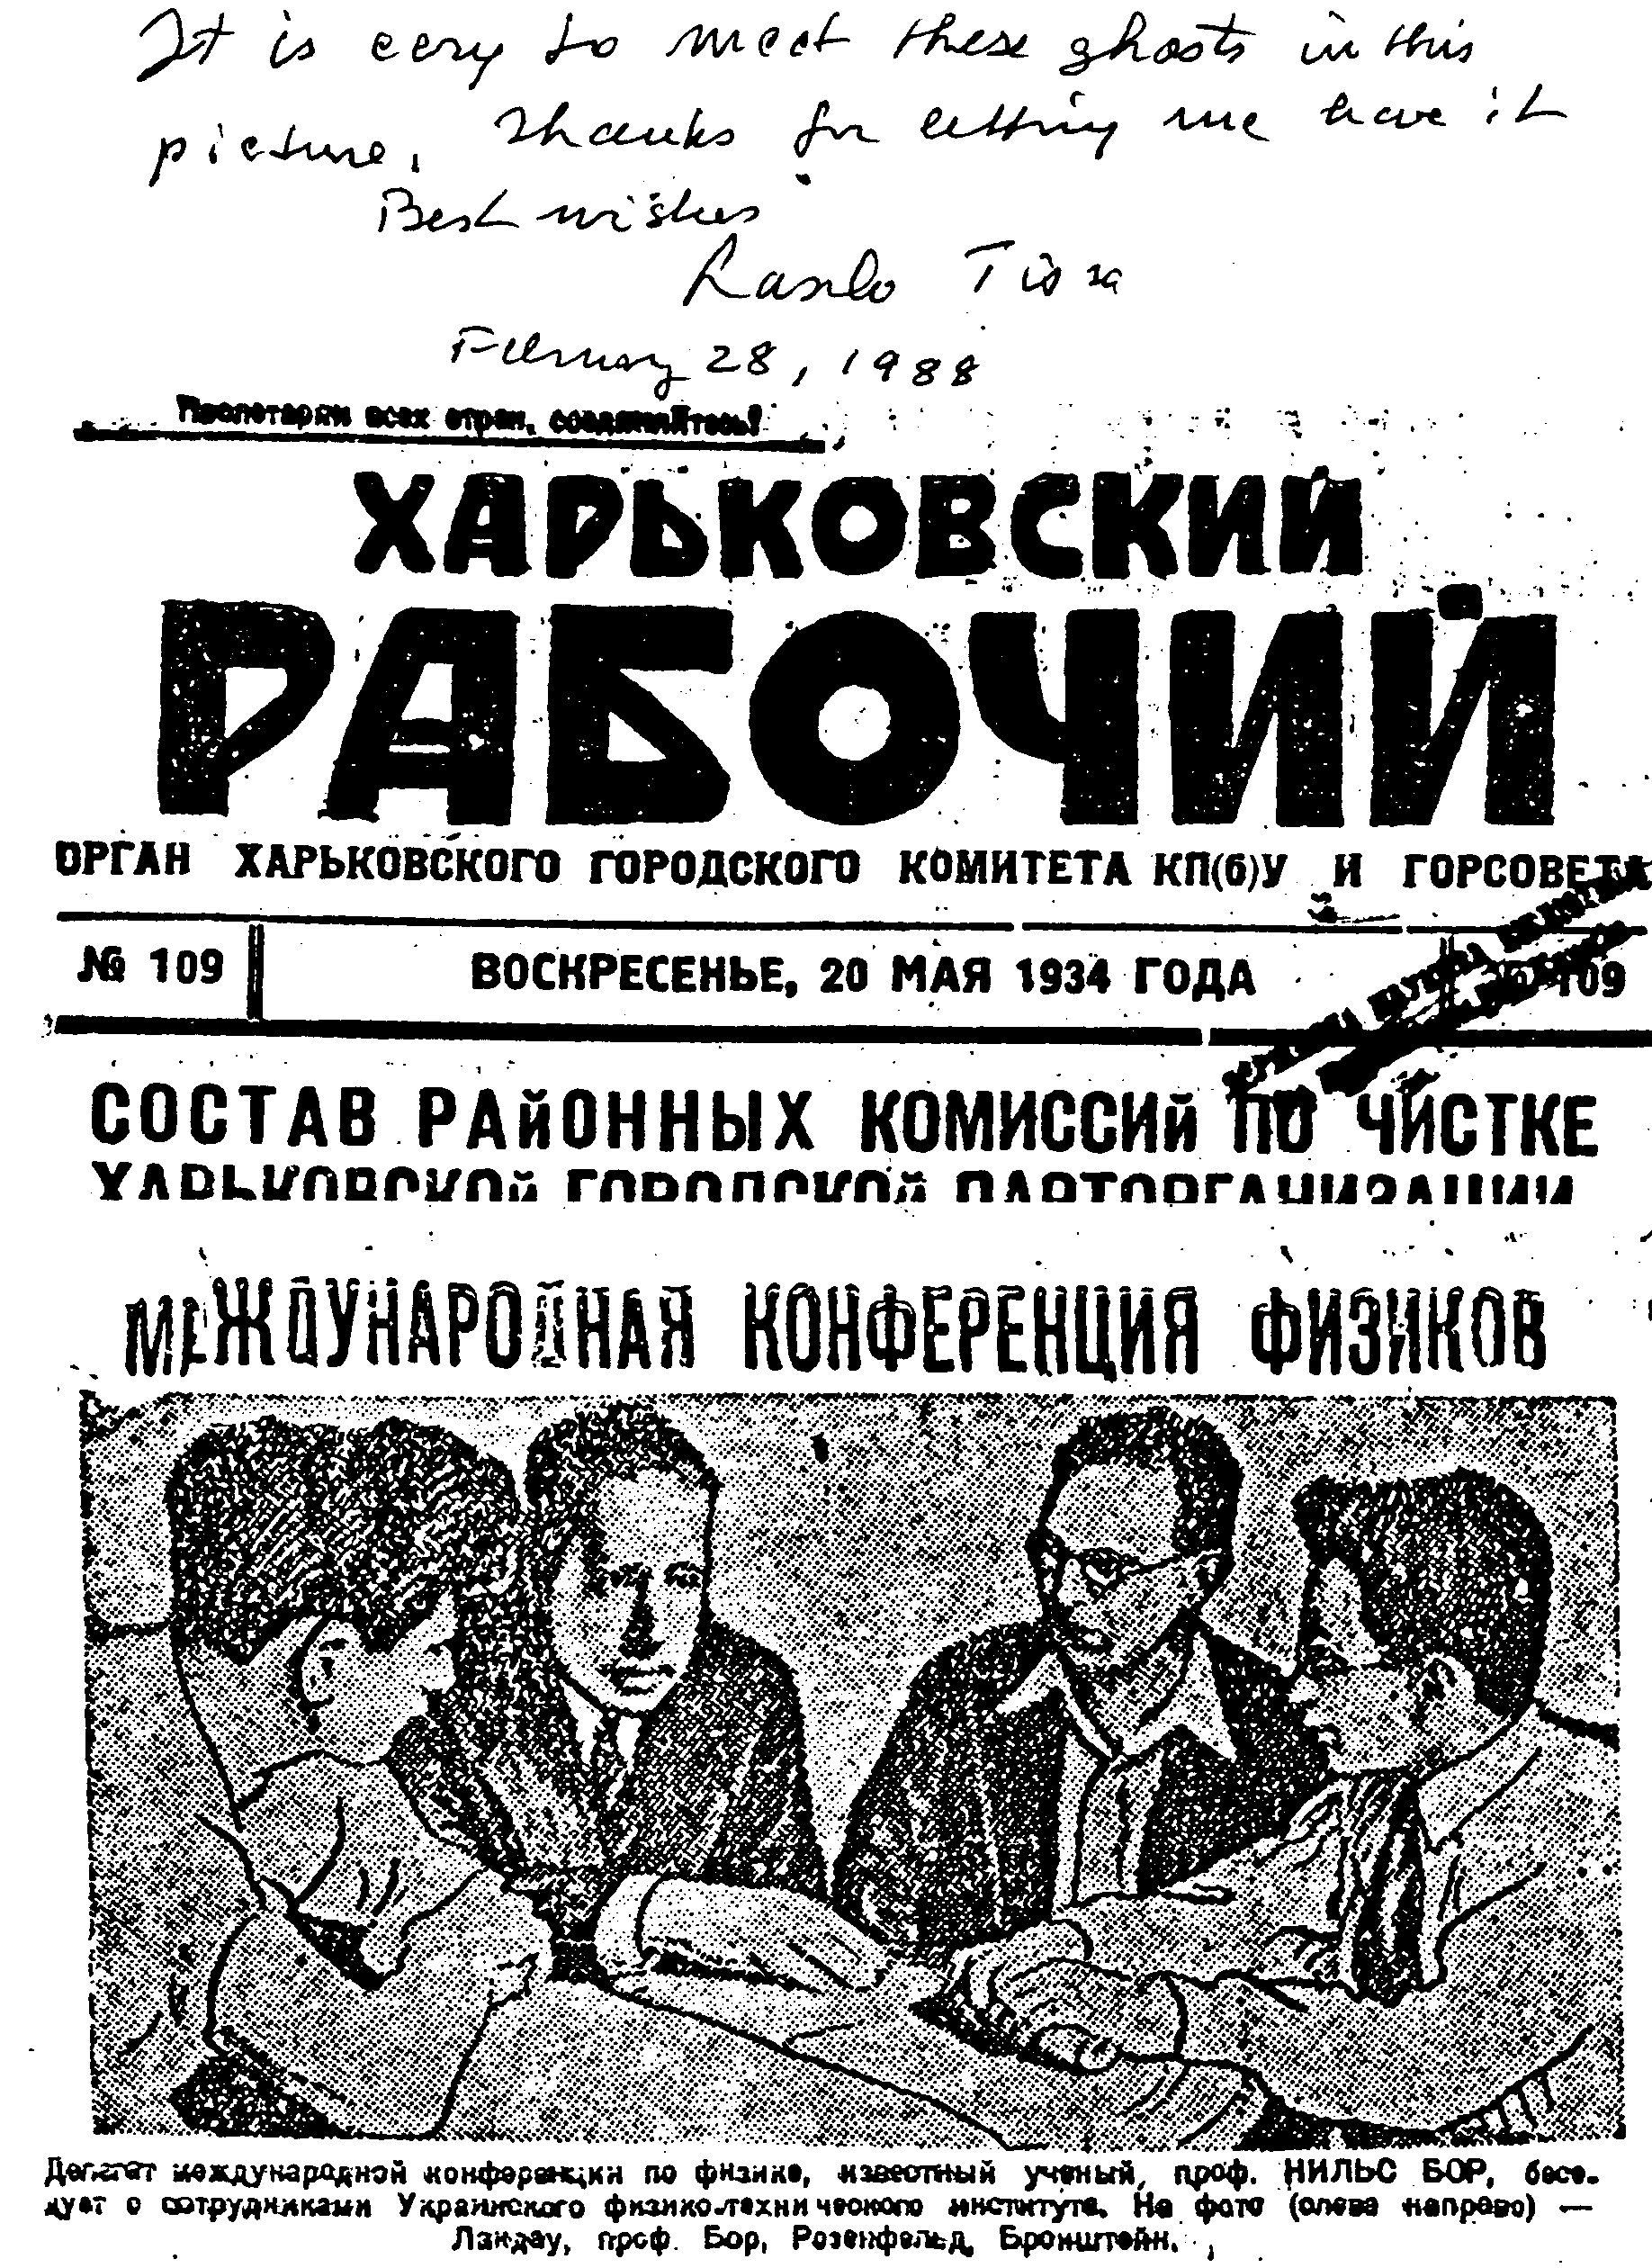 Landau, Bohr, Rosenfeld, and Bronstein in the newspaper “Kharkov Worker” 20 March 1934